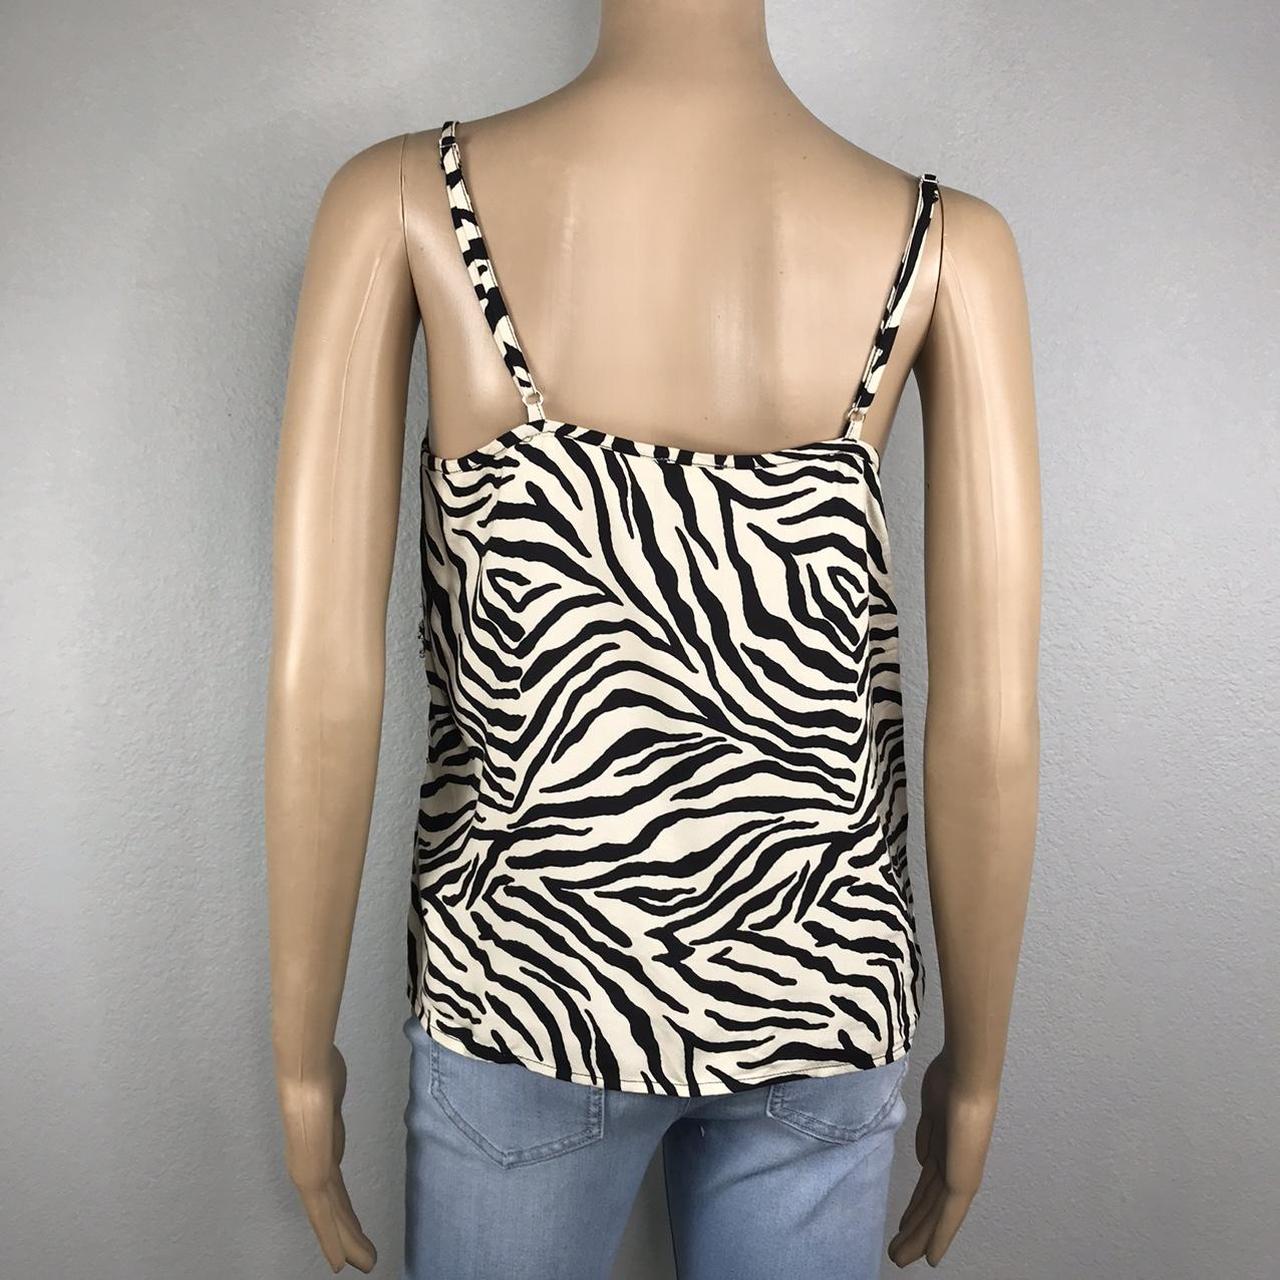 Product Image 4 - Zebra print lace cami tank
Color